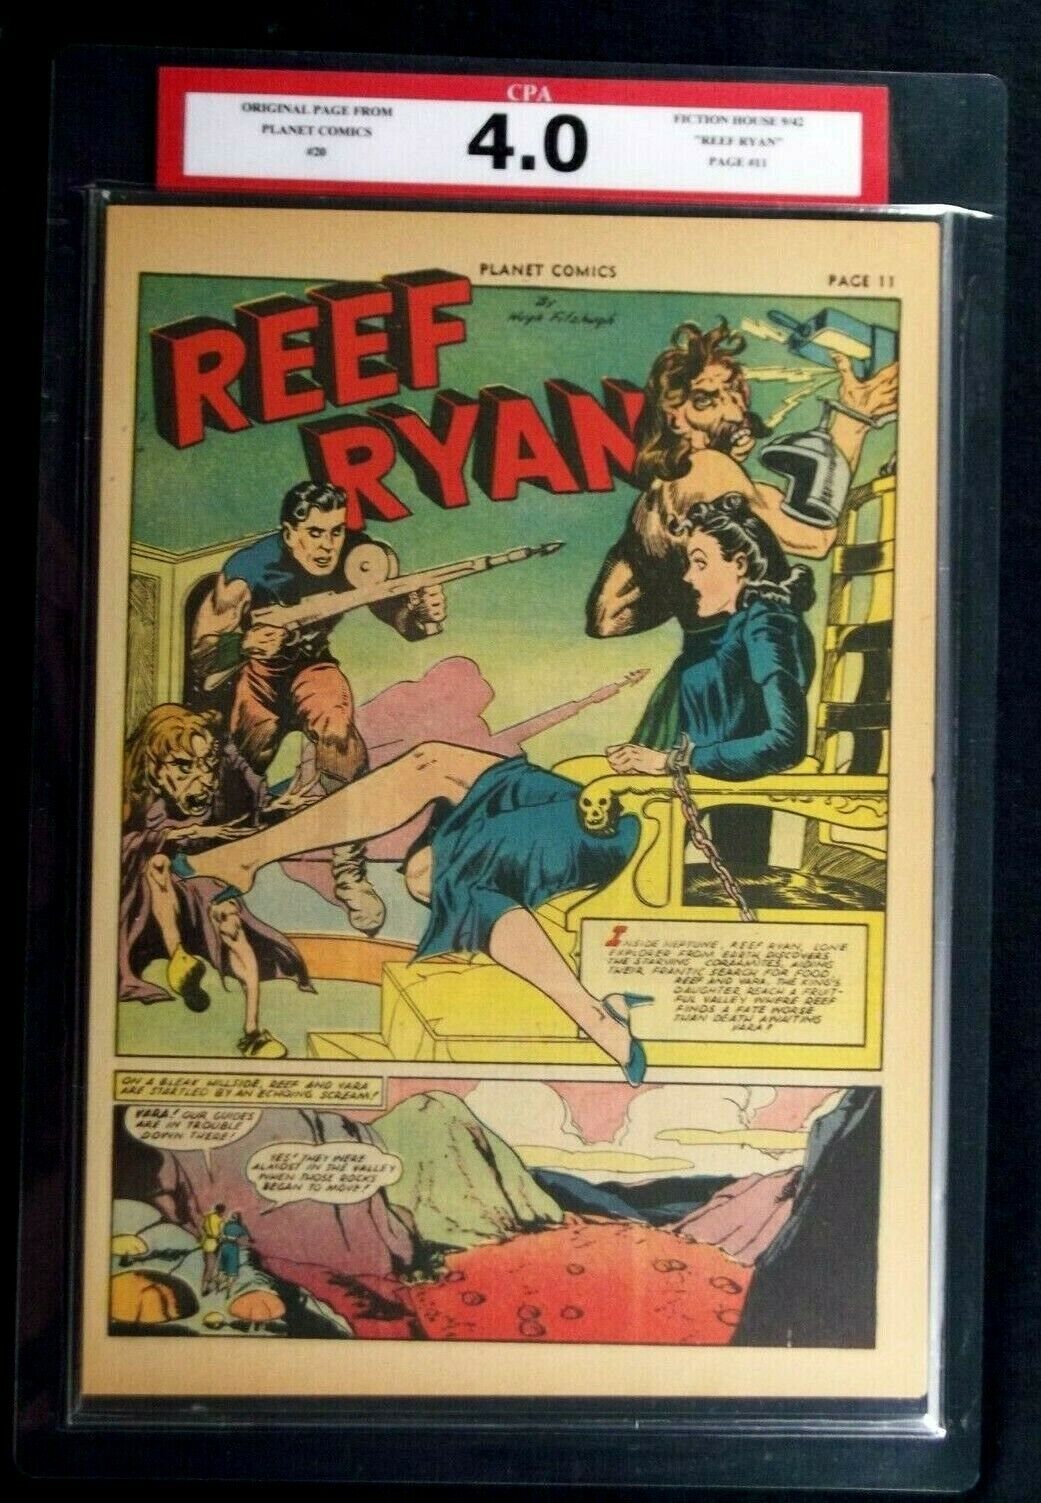 Planet Comics #20 CPA 4.0 Single page #11 Reef Ryan Bondage panel